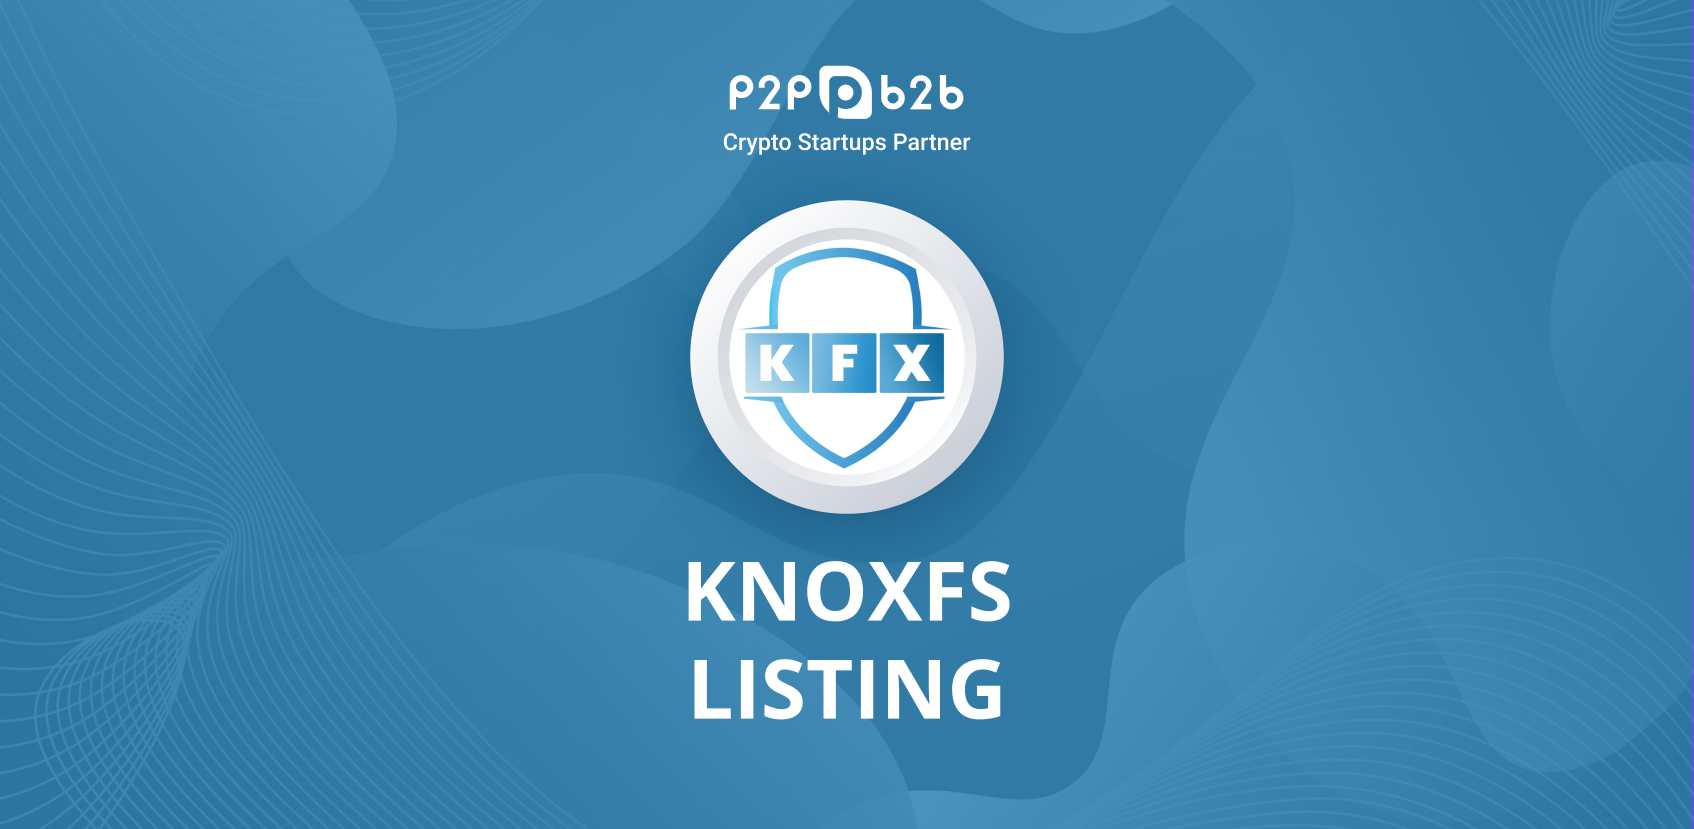 KnoxFS has been listed on P2PB2B - Crypto news 2021 ...